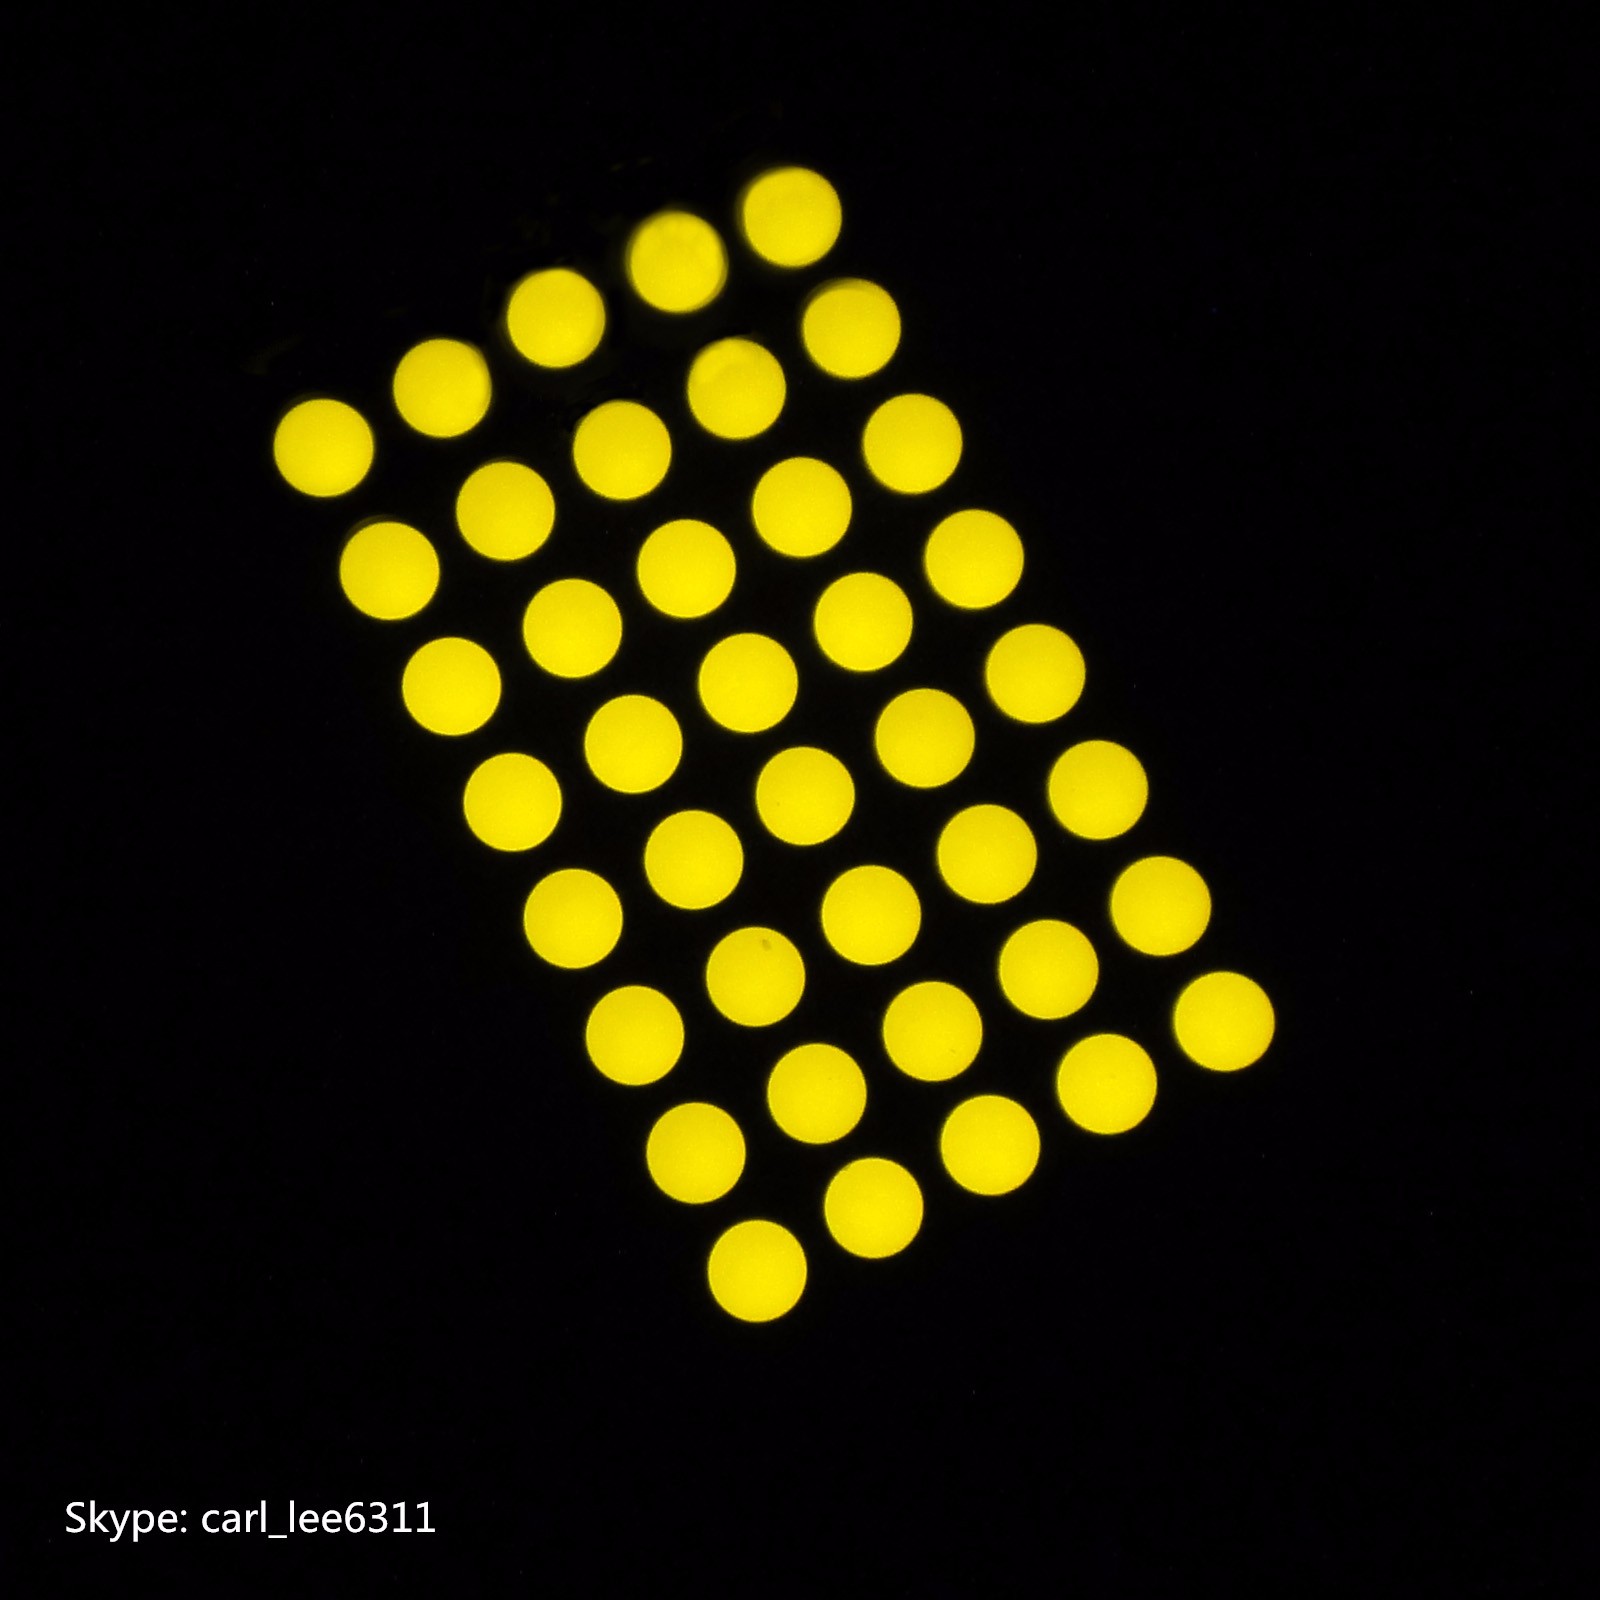 Comprar Pantalla LED de matriz de puntos de 5x8, Pantalla LED de matriz de puntos de 5x8 Precios, Pantalla LED de matriz de puntos de 5x8 Marcas, Pantalla LED de matriz de puntos de 5x8 Fabricante, Pantalla LED de matriz de puntos de 5x8 Citas, Pantalla LED de matriz de puntos de 5x8 Empresa.